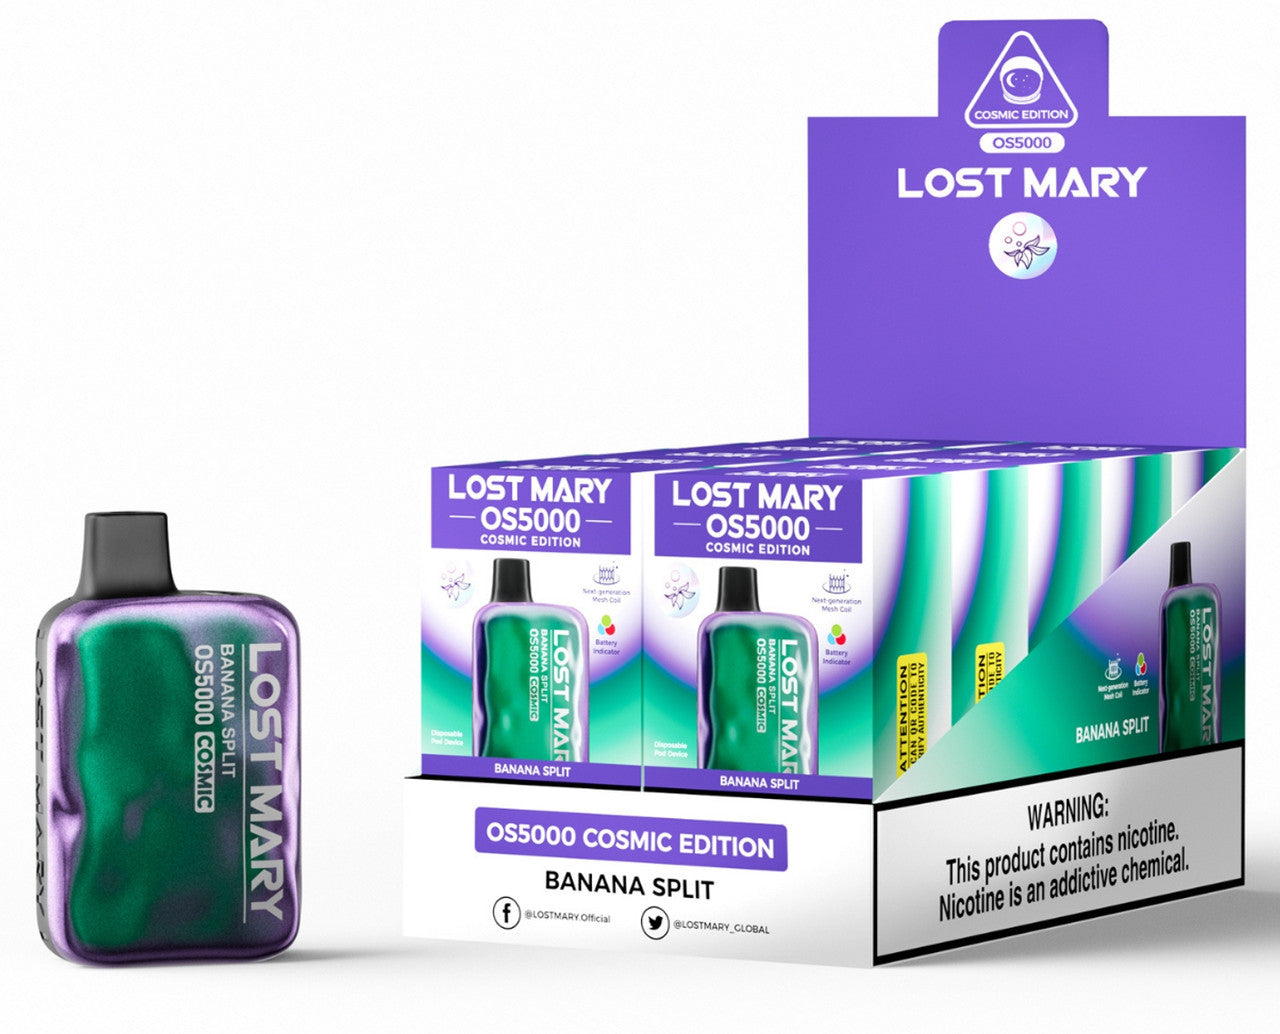 Lost-Mary-OS5000-Cosmic-Edition-Banana-Split-Box-1280x1034-JPG